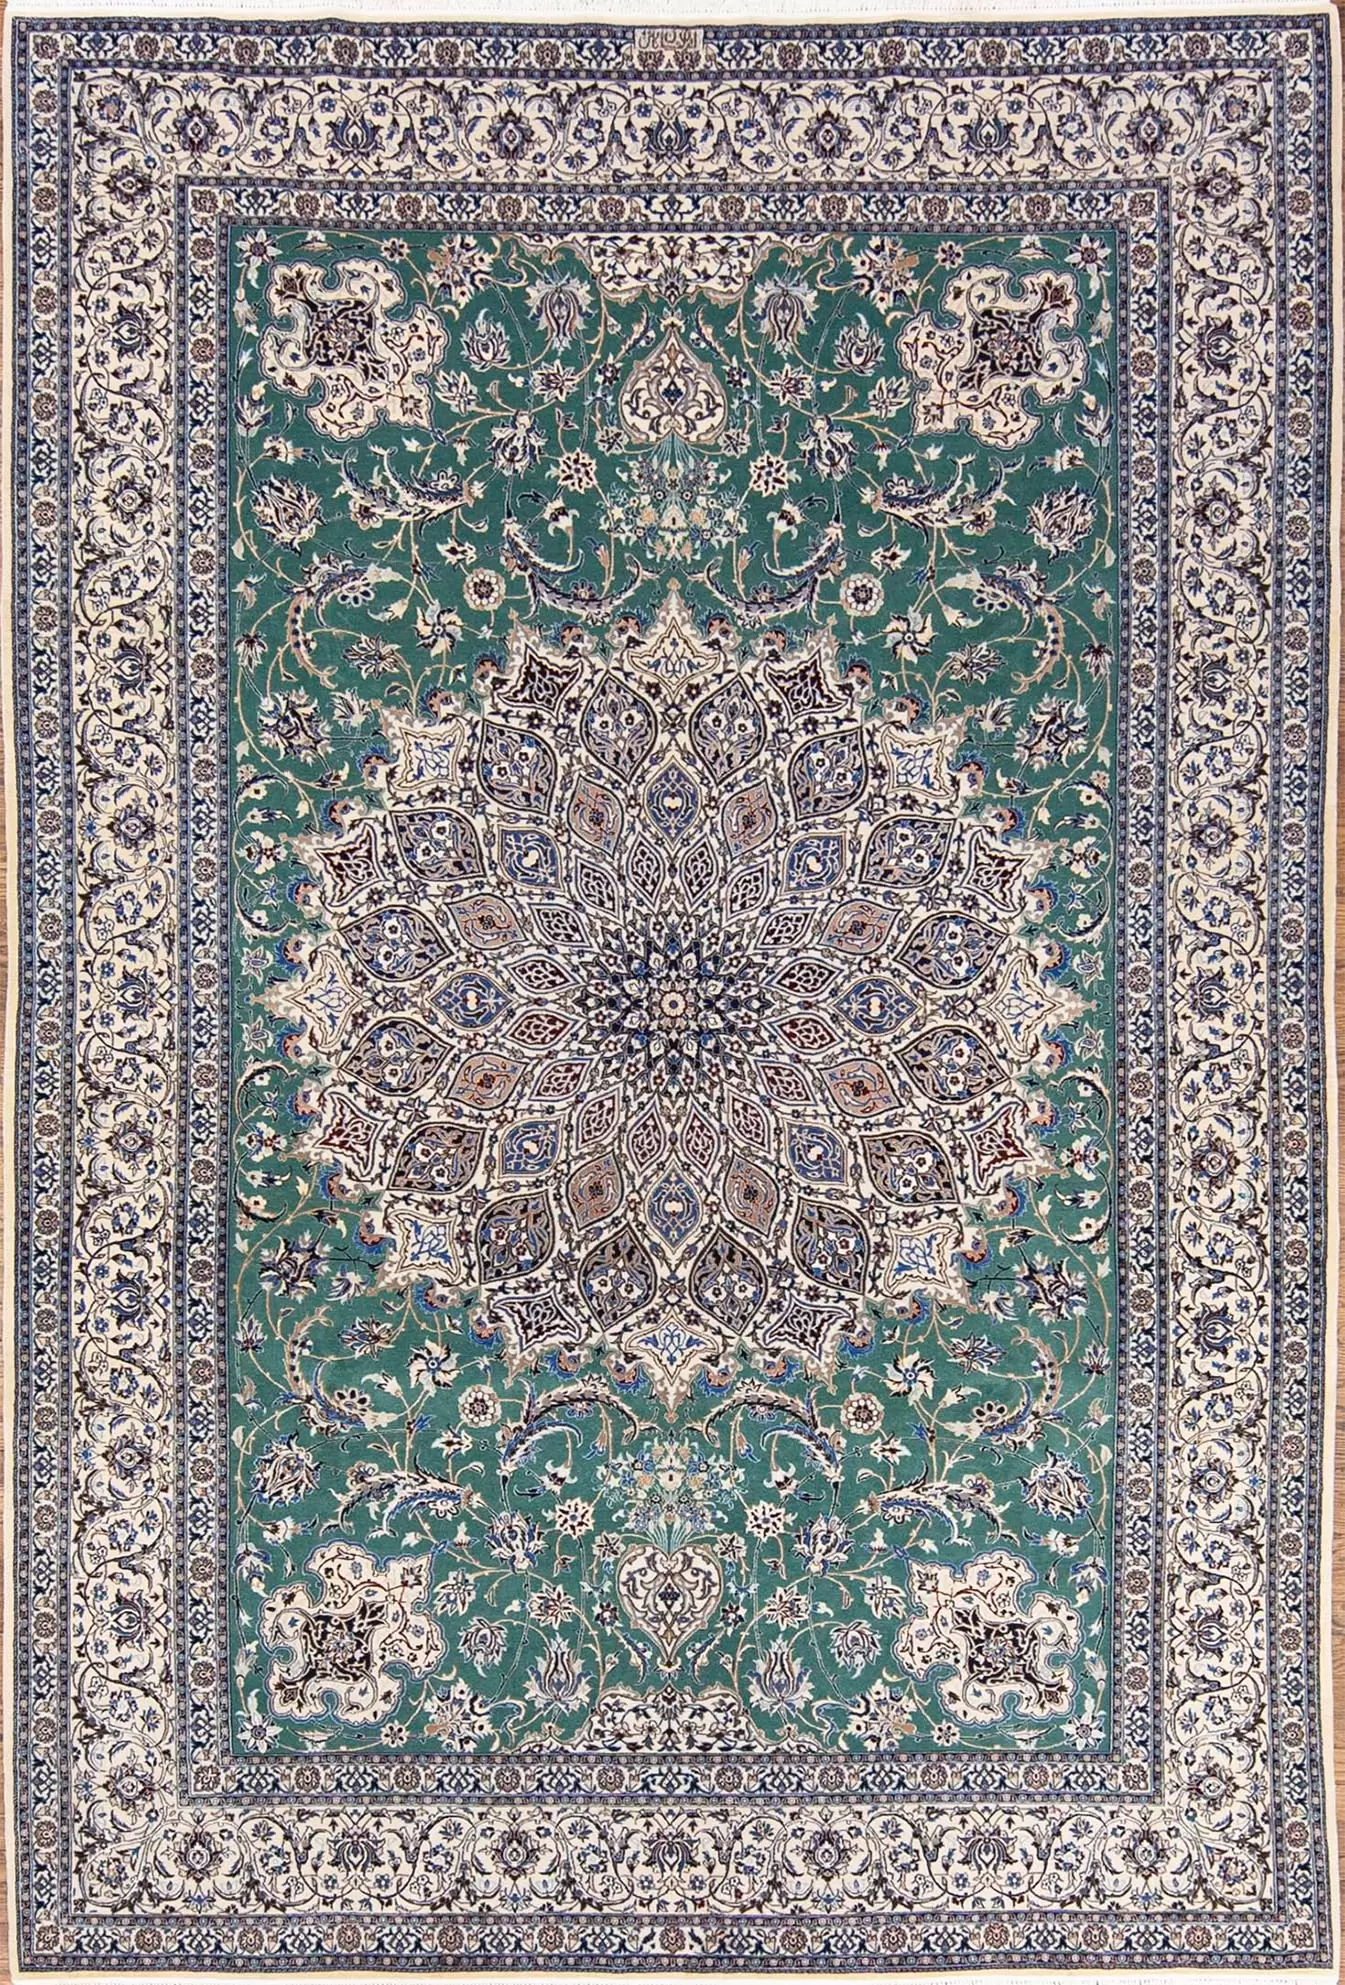 Persian Nain rug. Hand knotted Habibian Nain wool and silk rug in green color with 625 KPSI. Size 6.9x10.